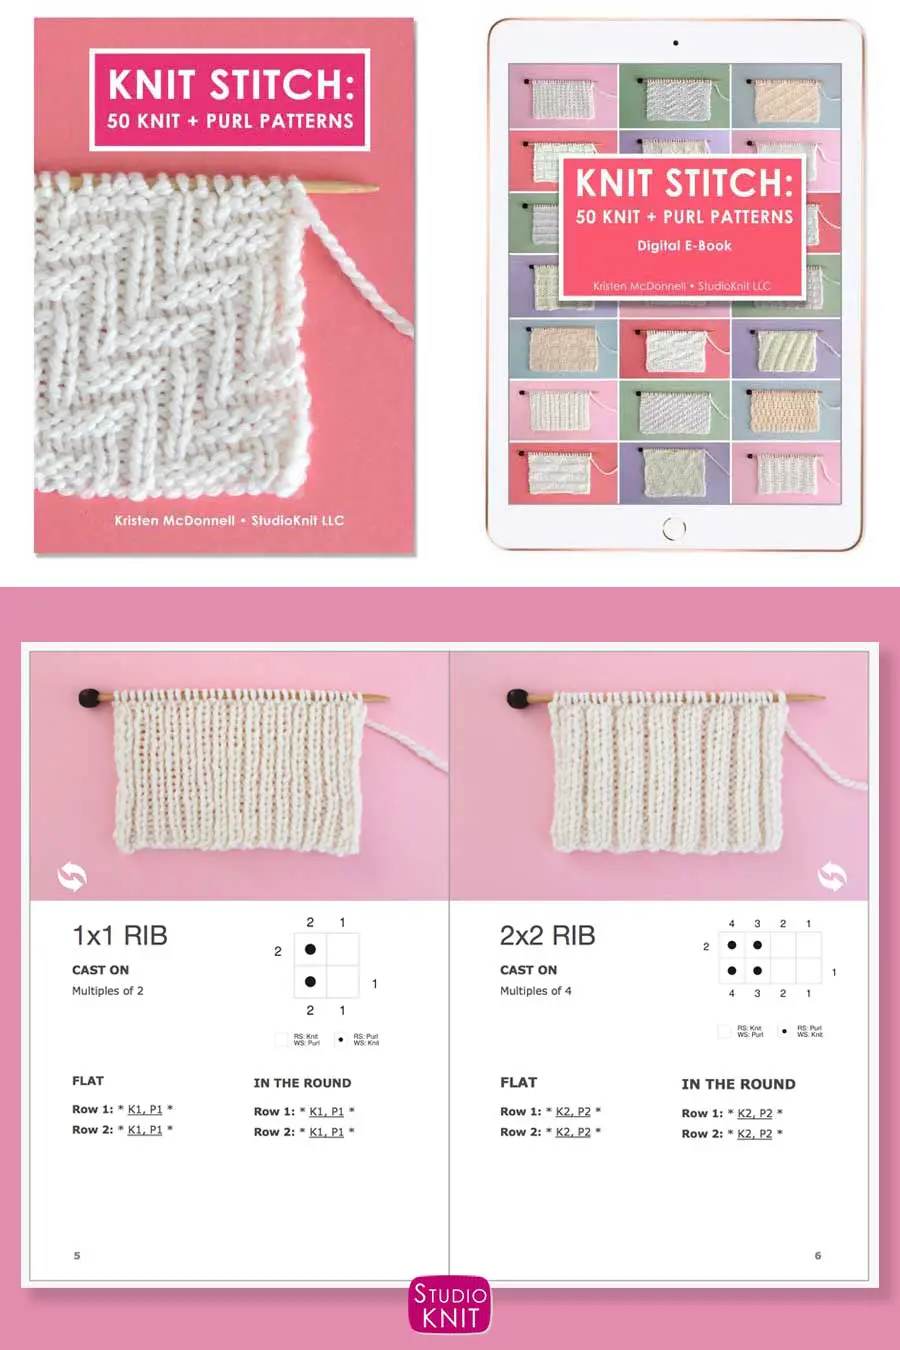 Knit Stitch Pattern Book with 1x1 Stitch Pattern by Studio Knit